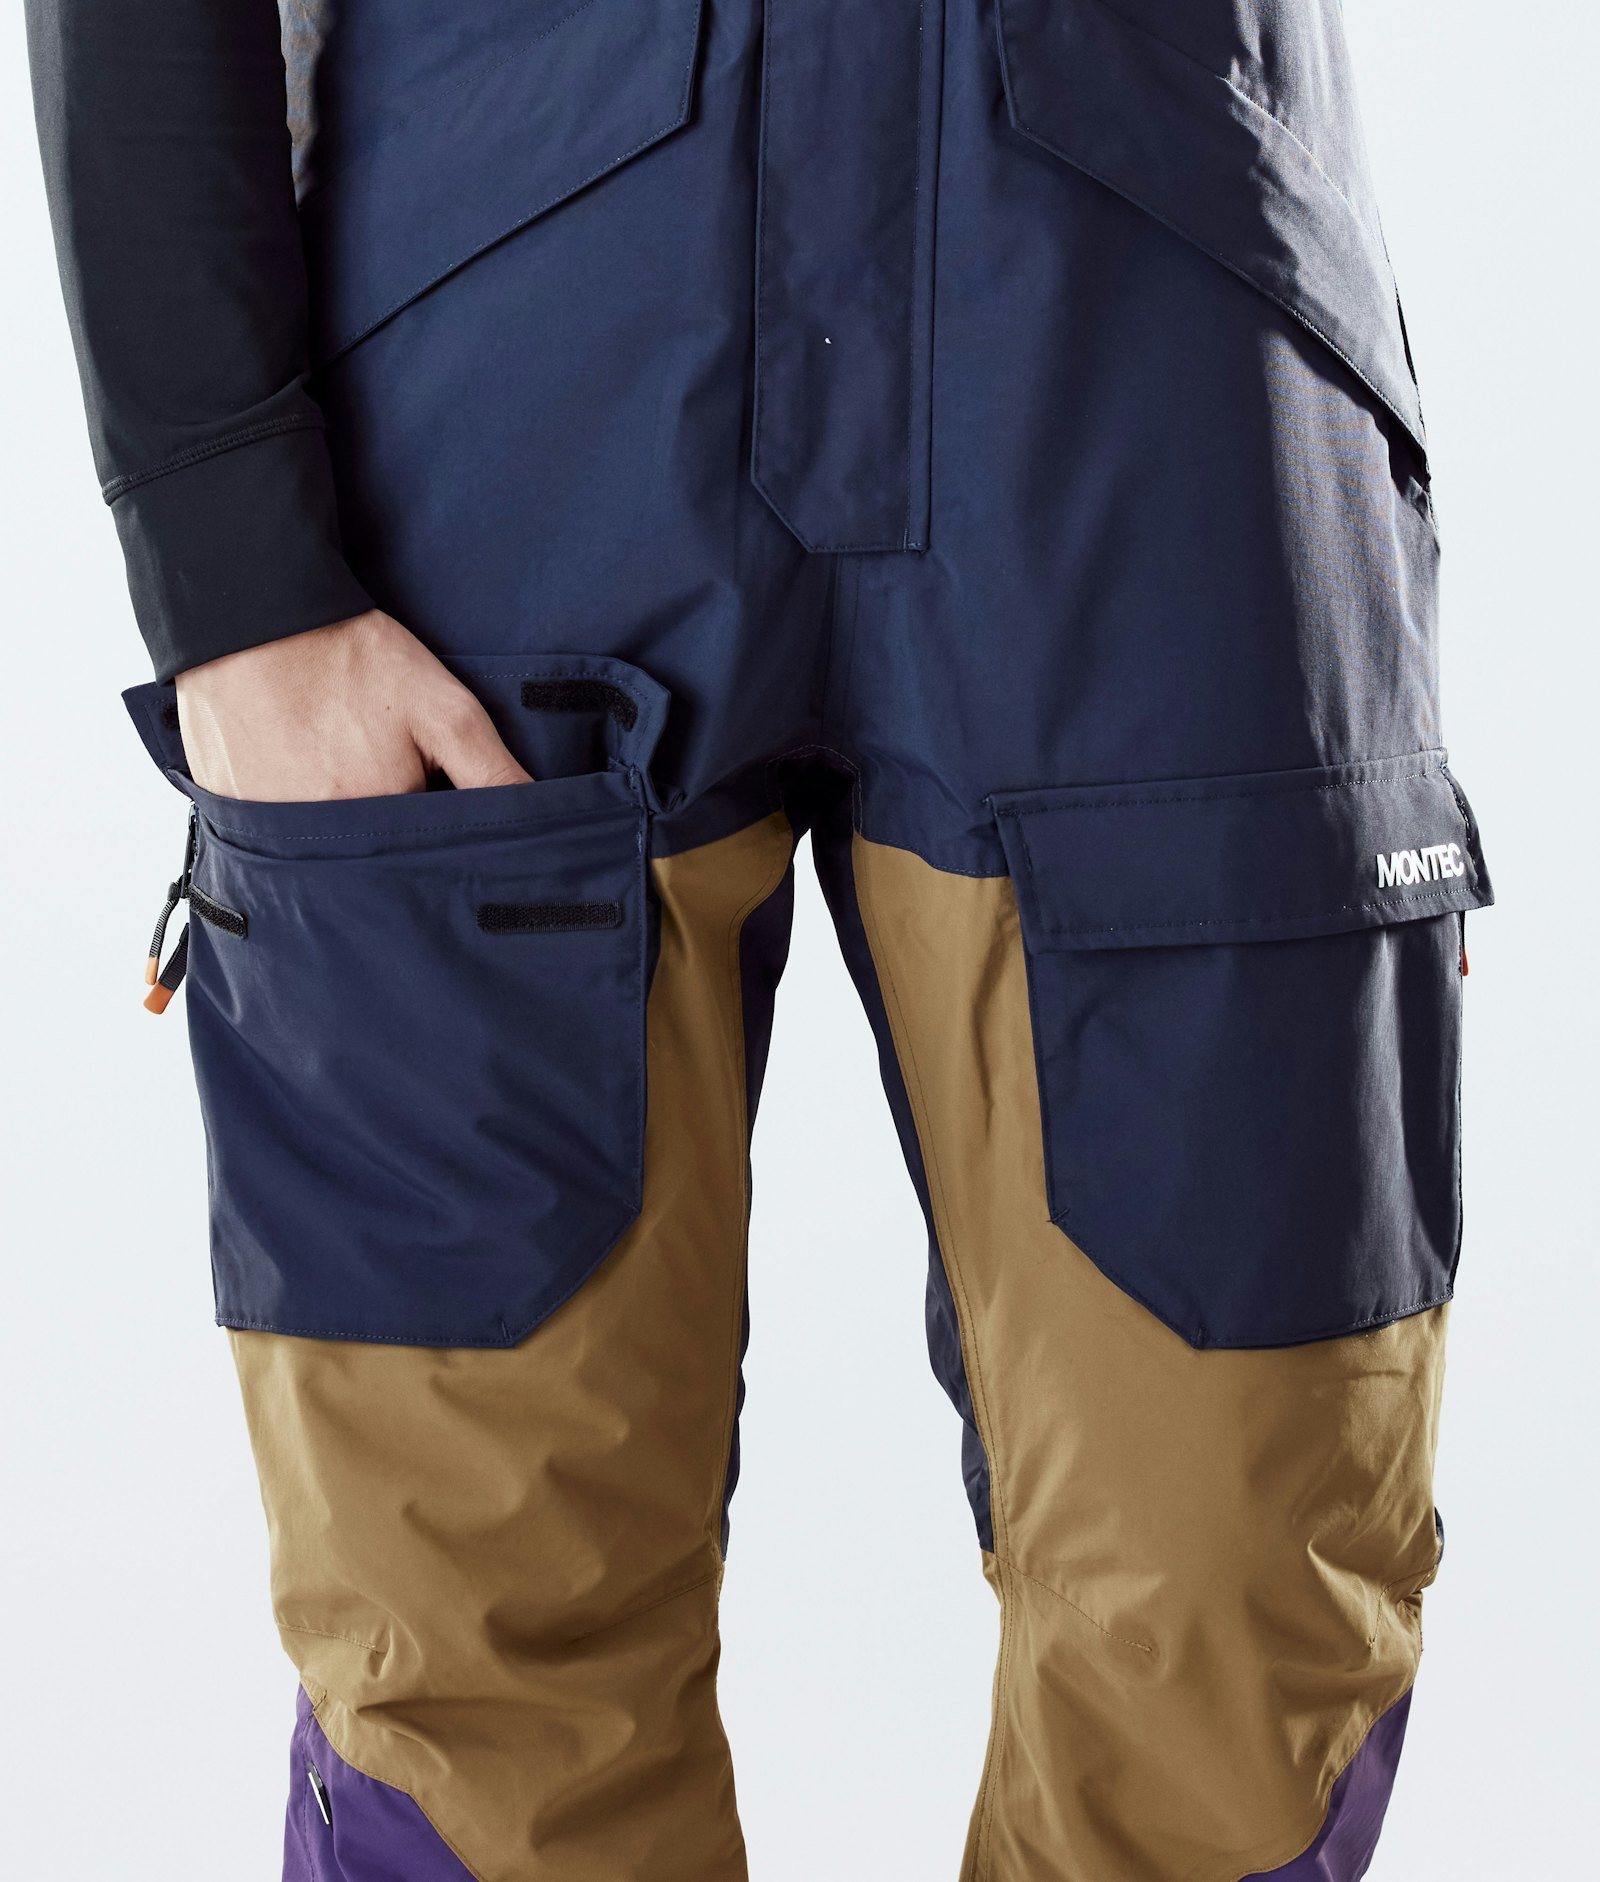 Fawk 2020 Snowboard Pants Men Marine/Gold/Purple